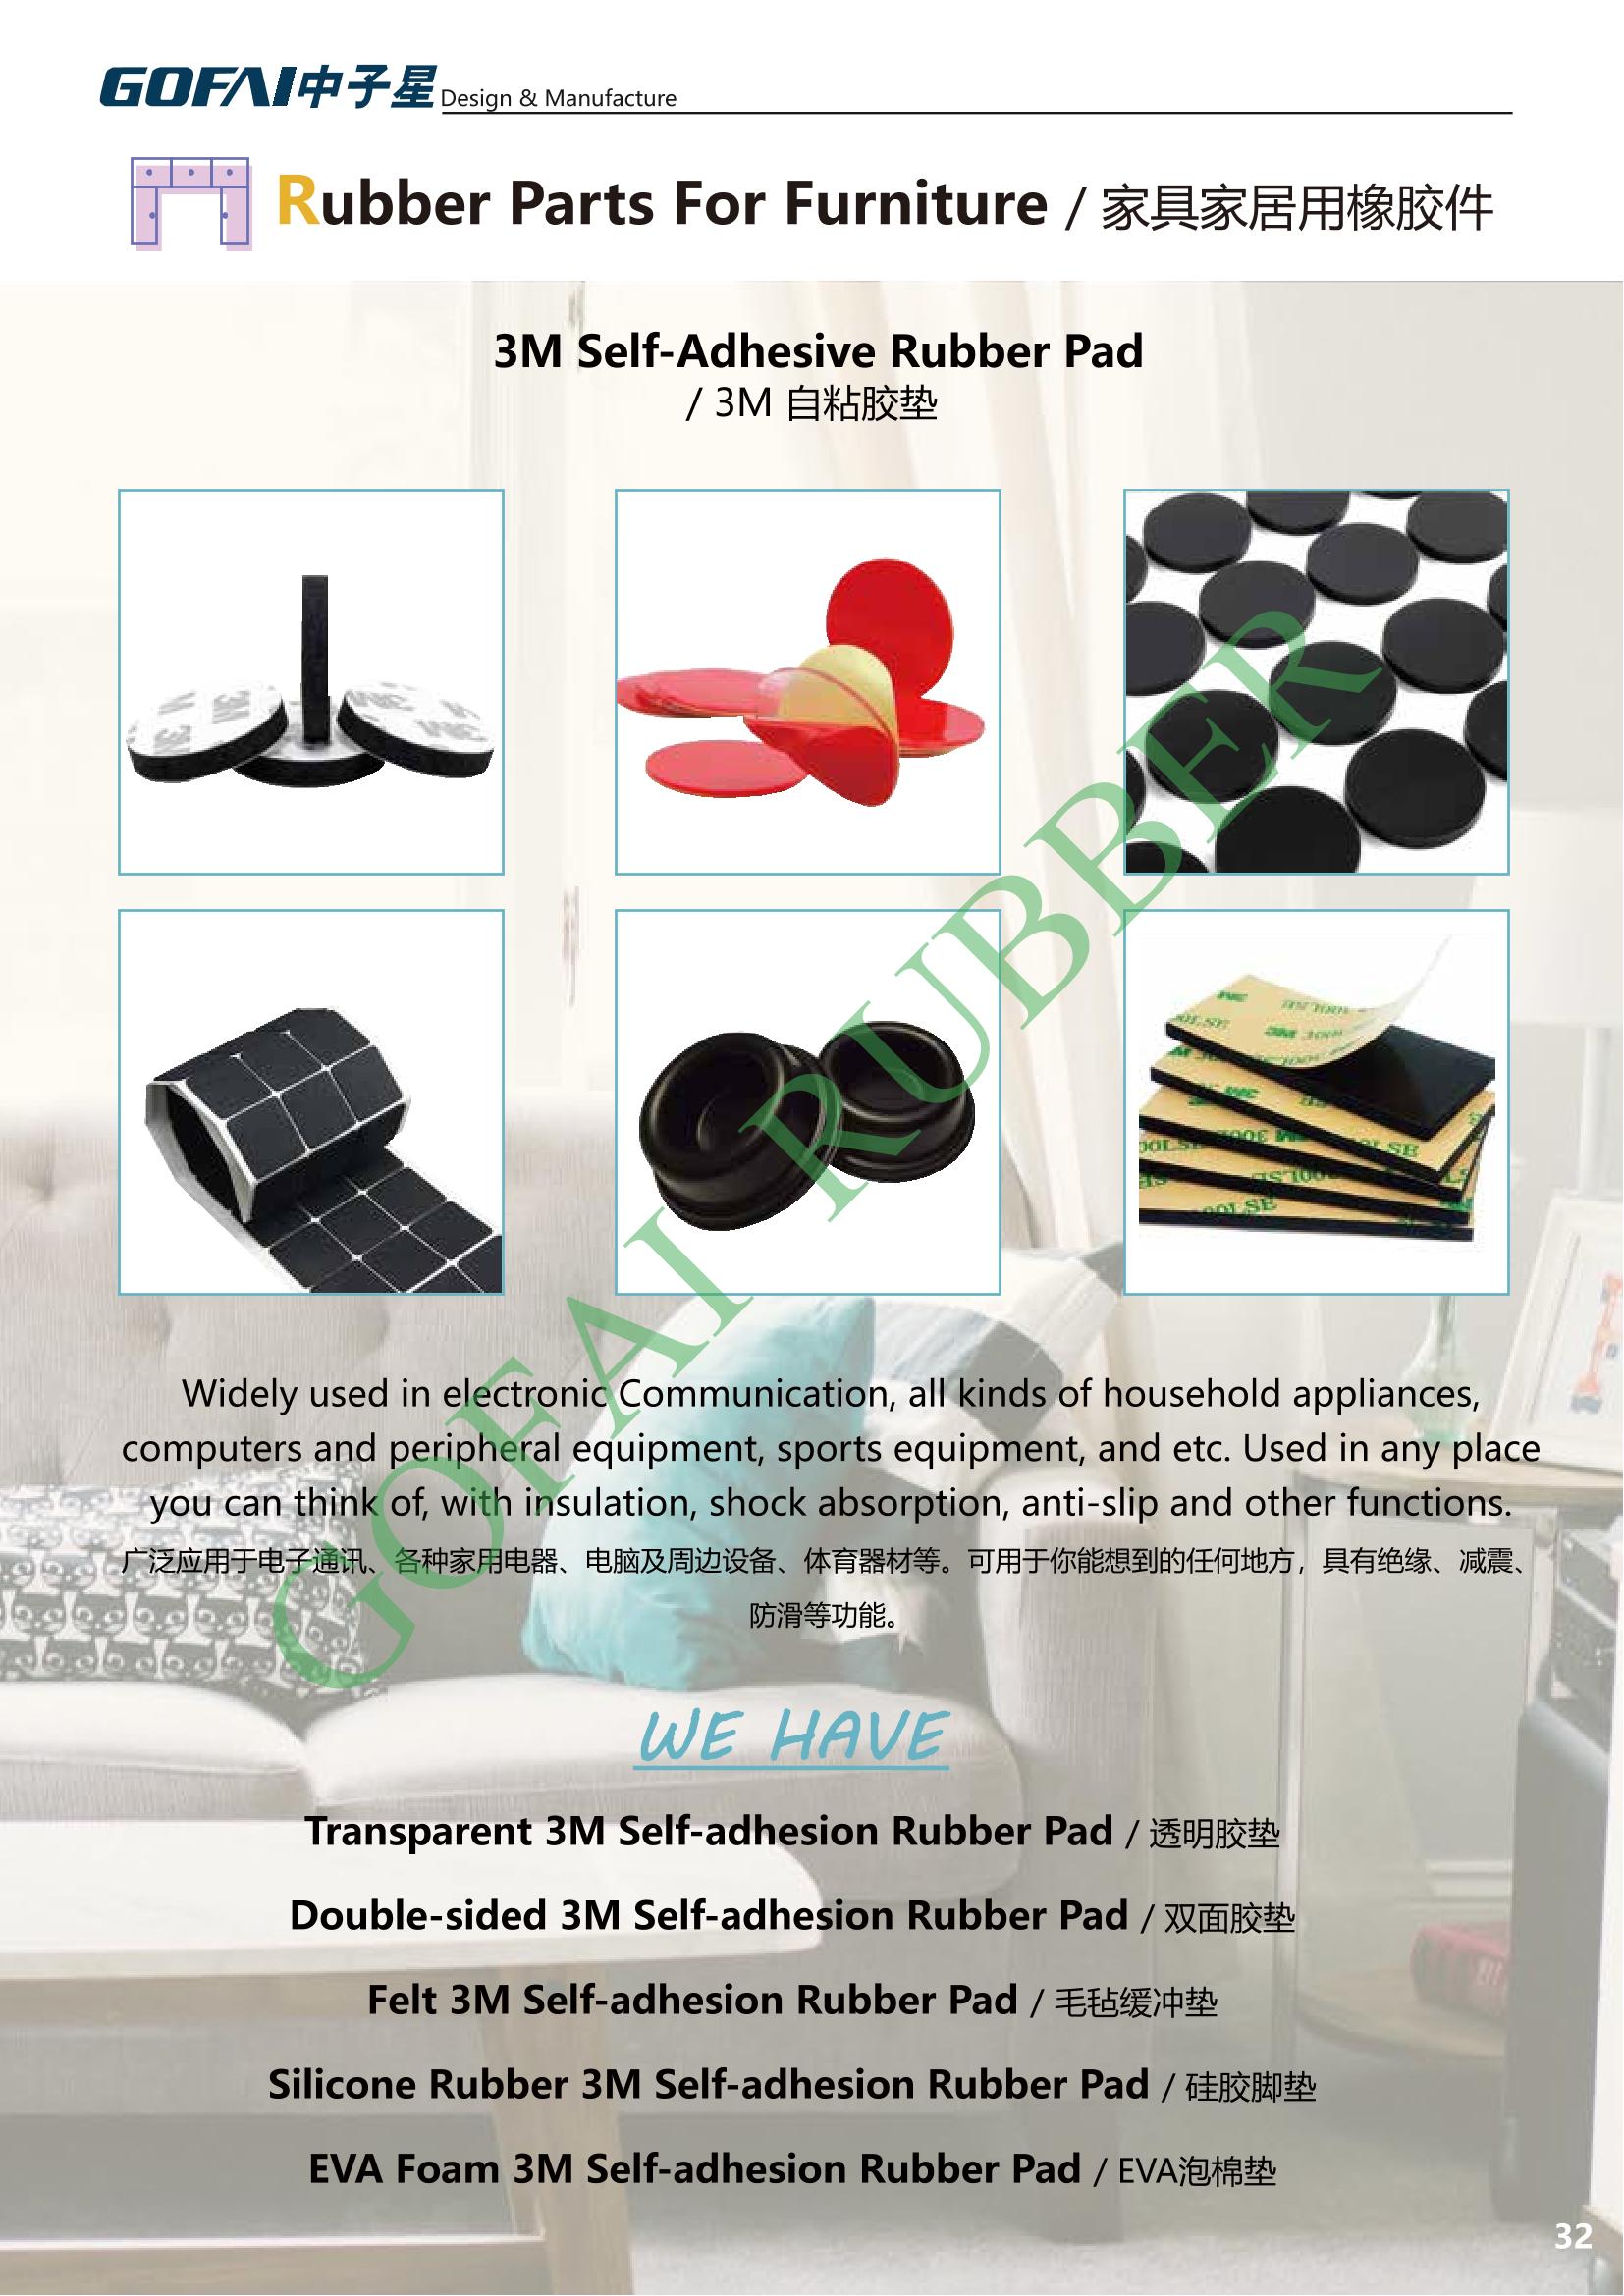 GOFAI rubberplastic products cataloge_32.jpg